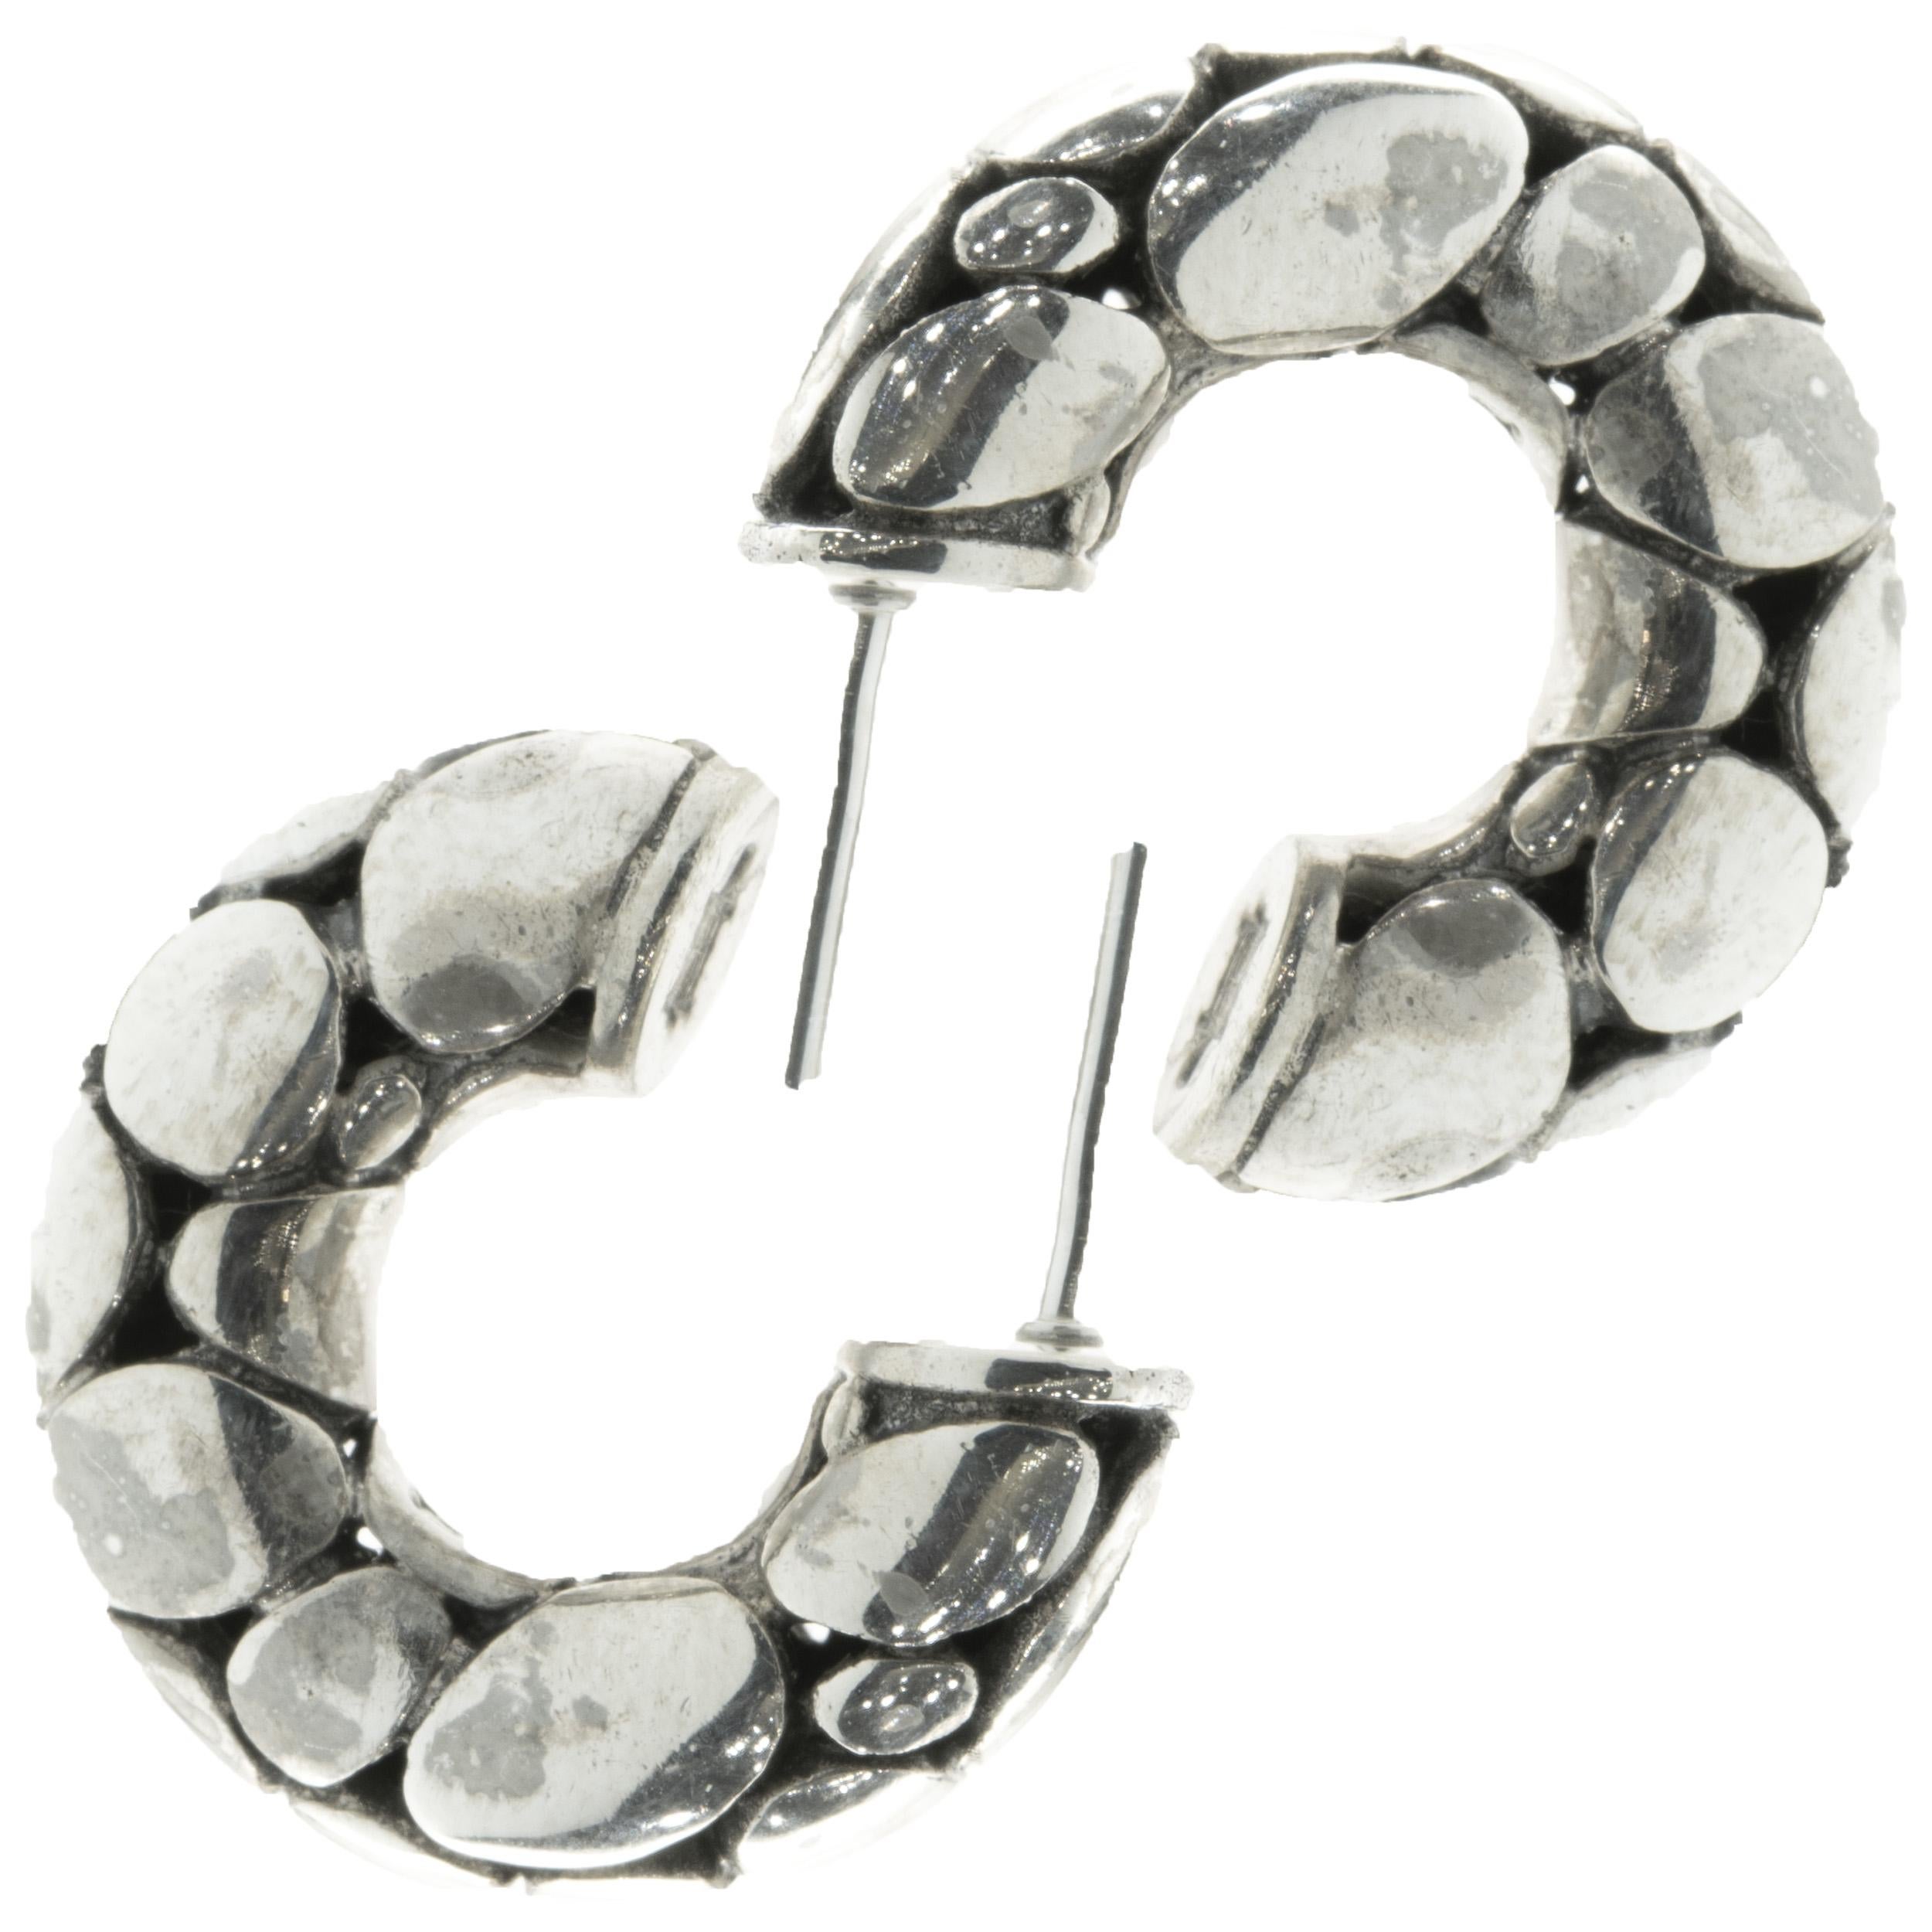 Designer: John Hardy
Material: Sterling Silver 
Dimensions: earrings measure 21mm long
Weight: 10.20 grams
